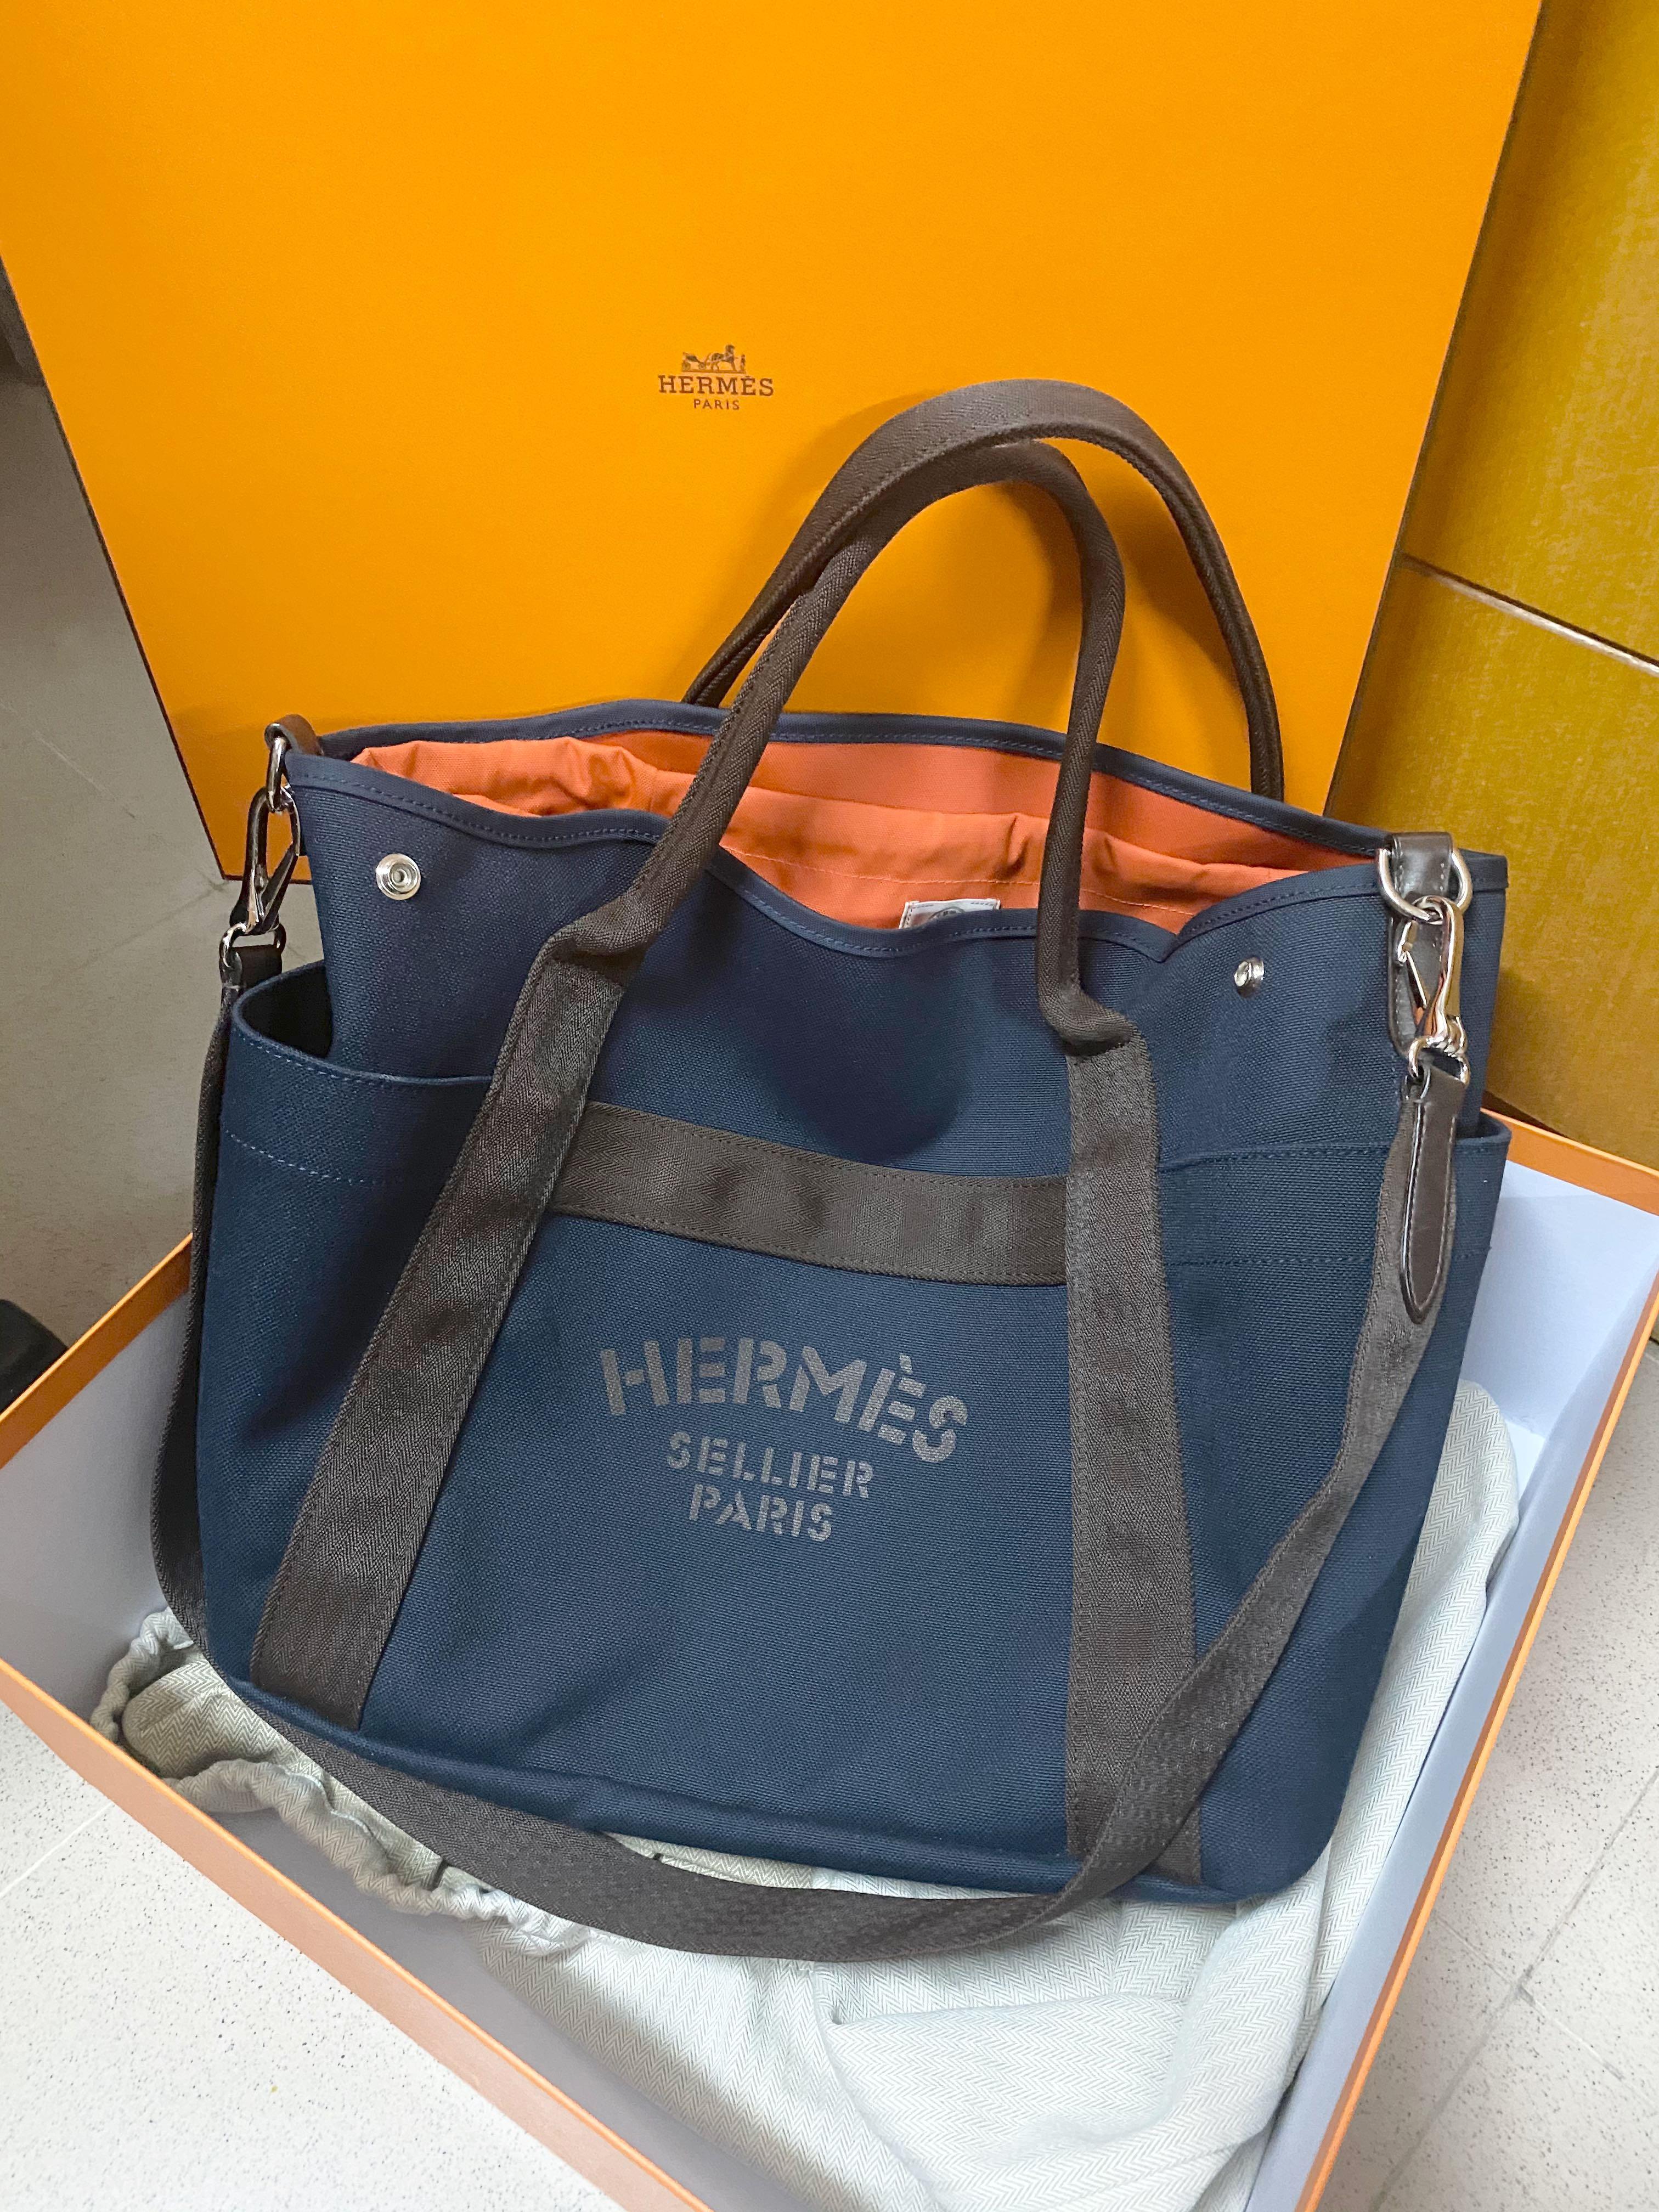 Hermes Sac De Pansage Bag